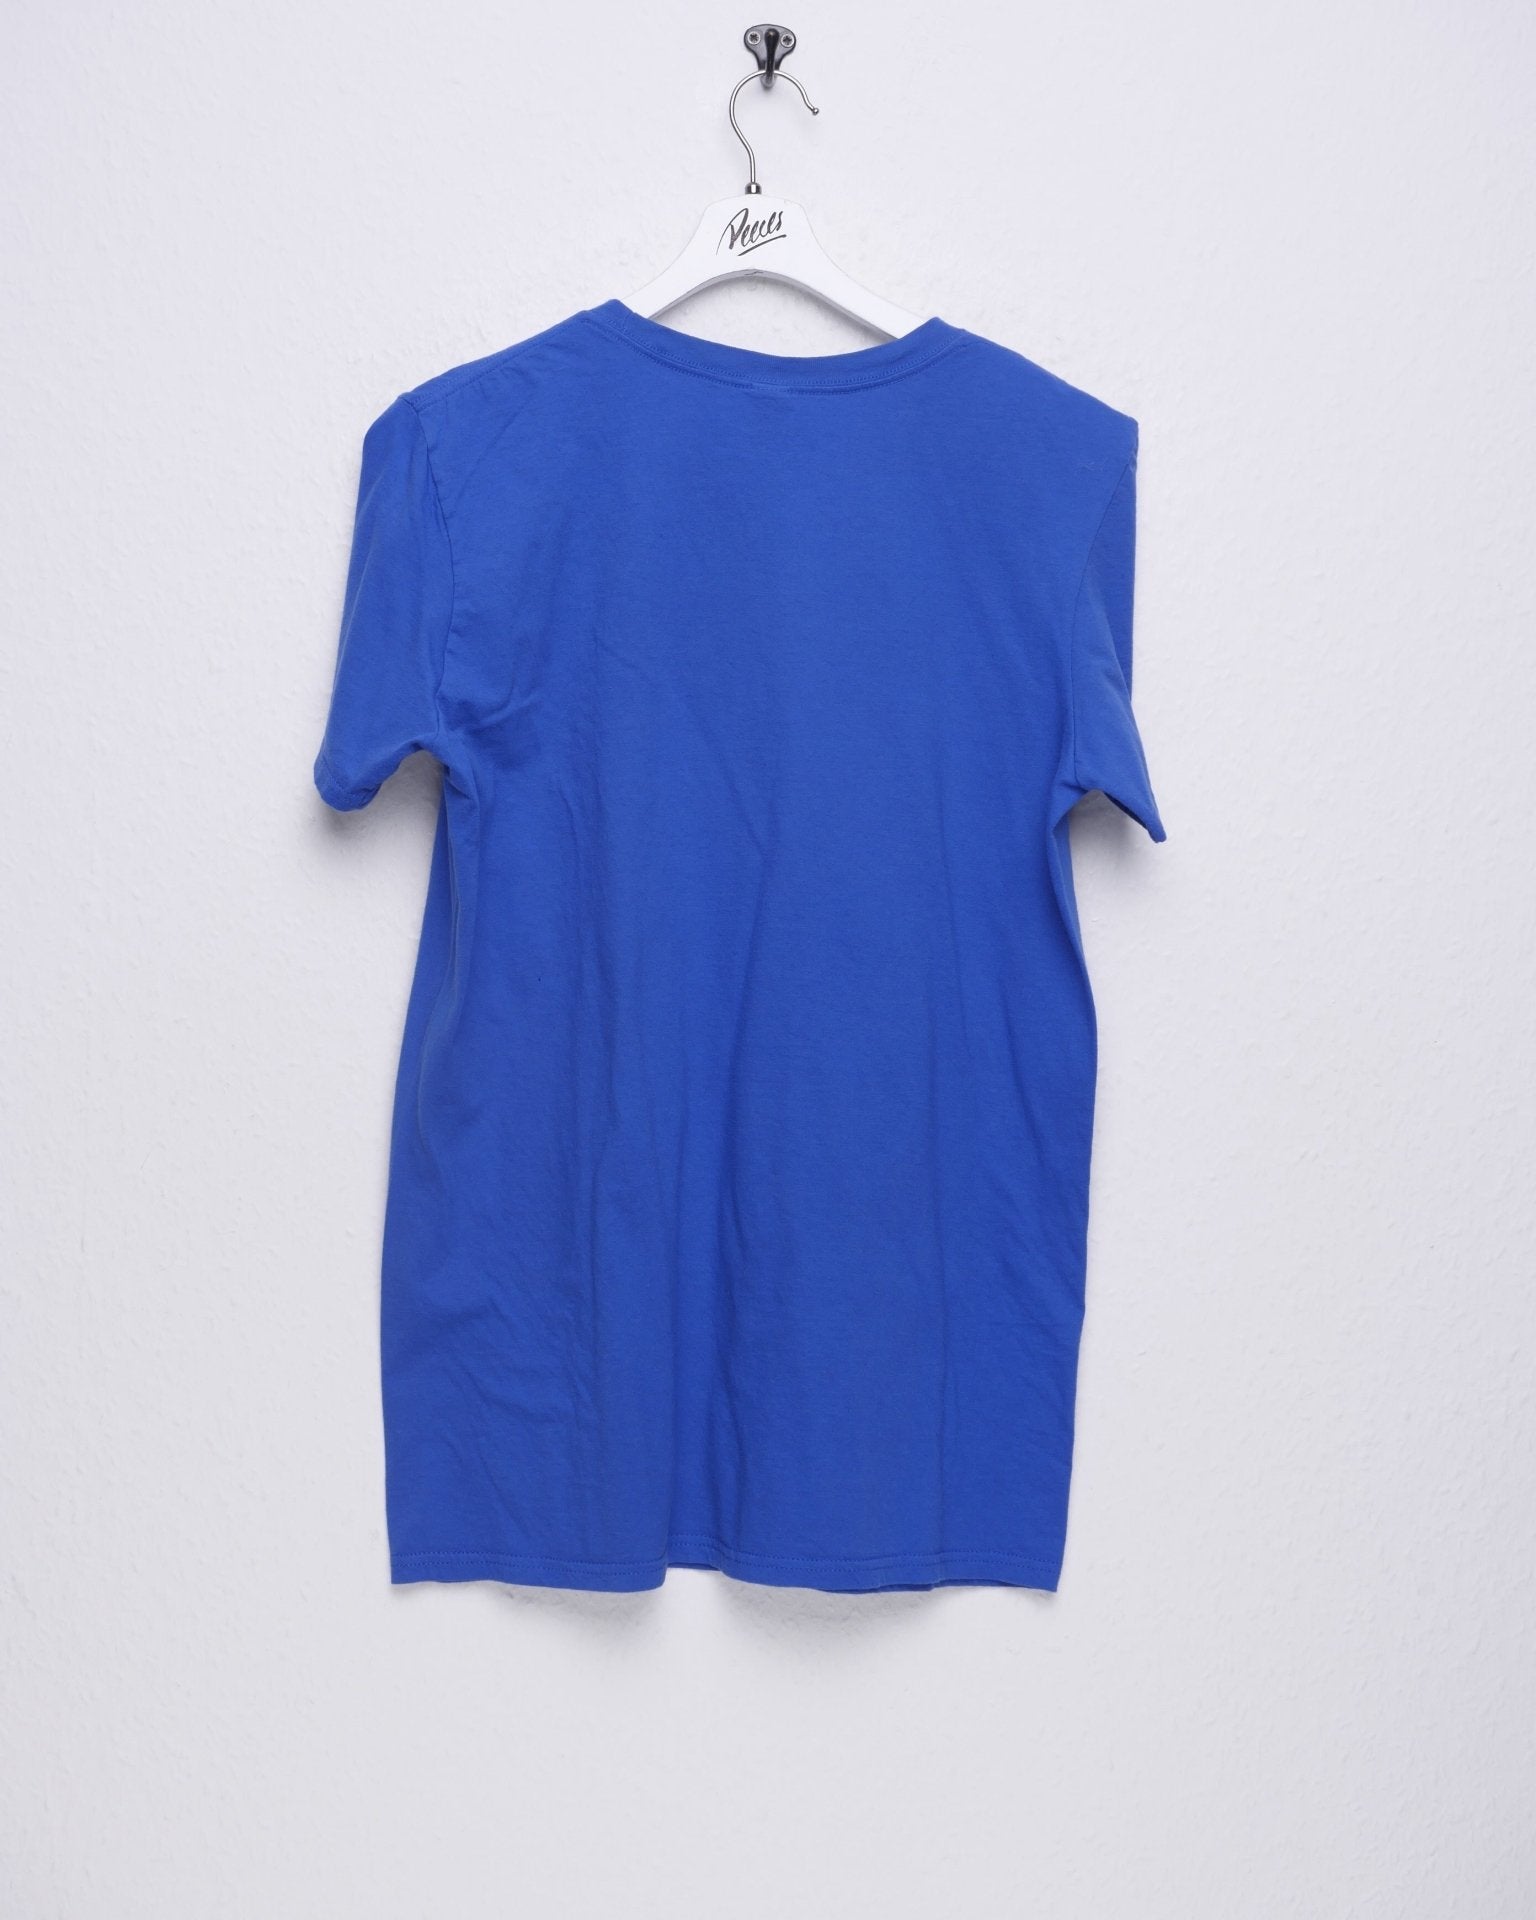 Anvil printed Graphic blue Vintage Shirt - Peeces